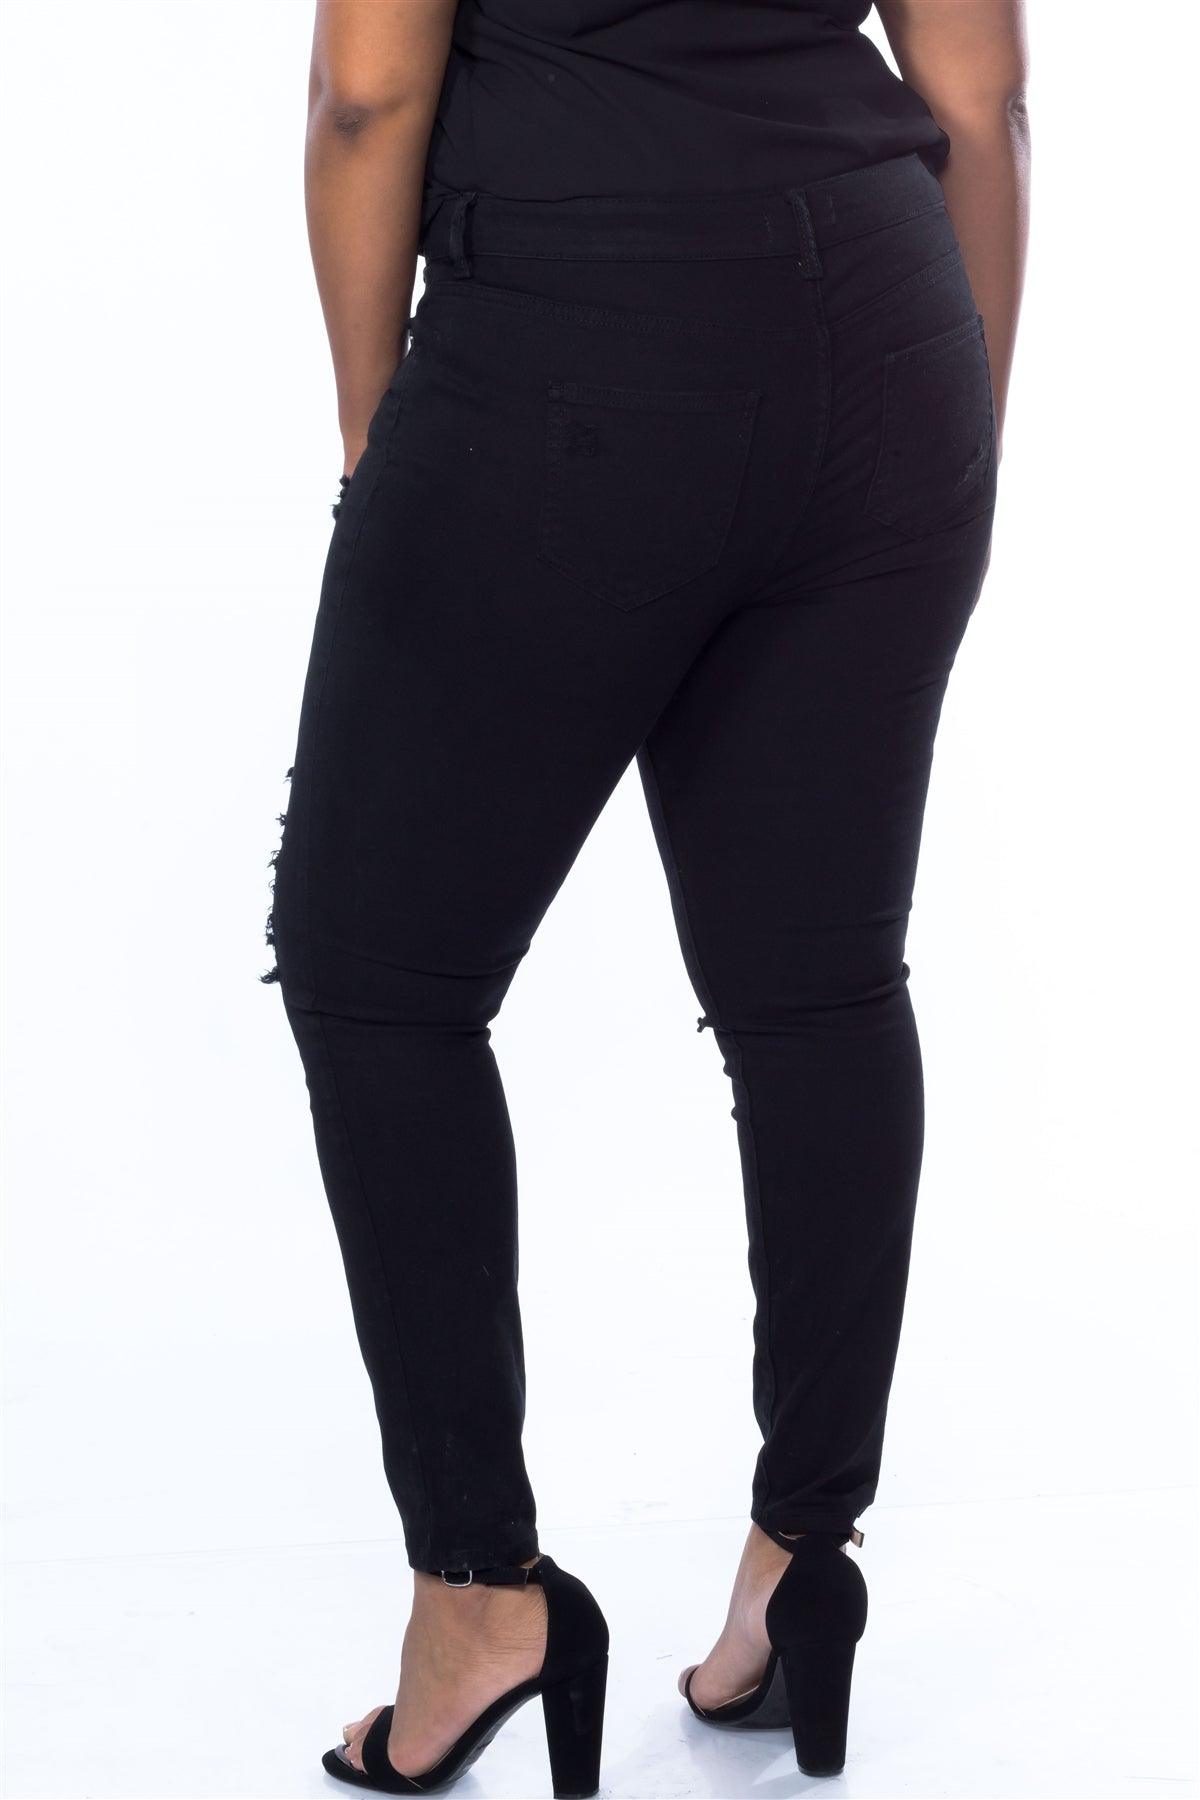 Cotton Spandex Black Plus Size Distressed Skinny Jeans